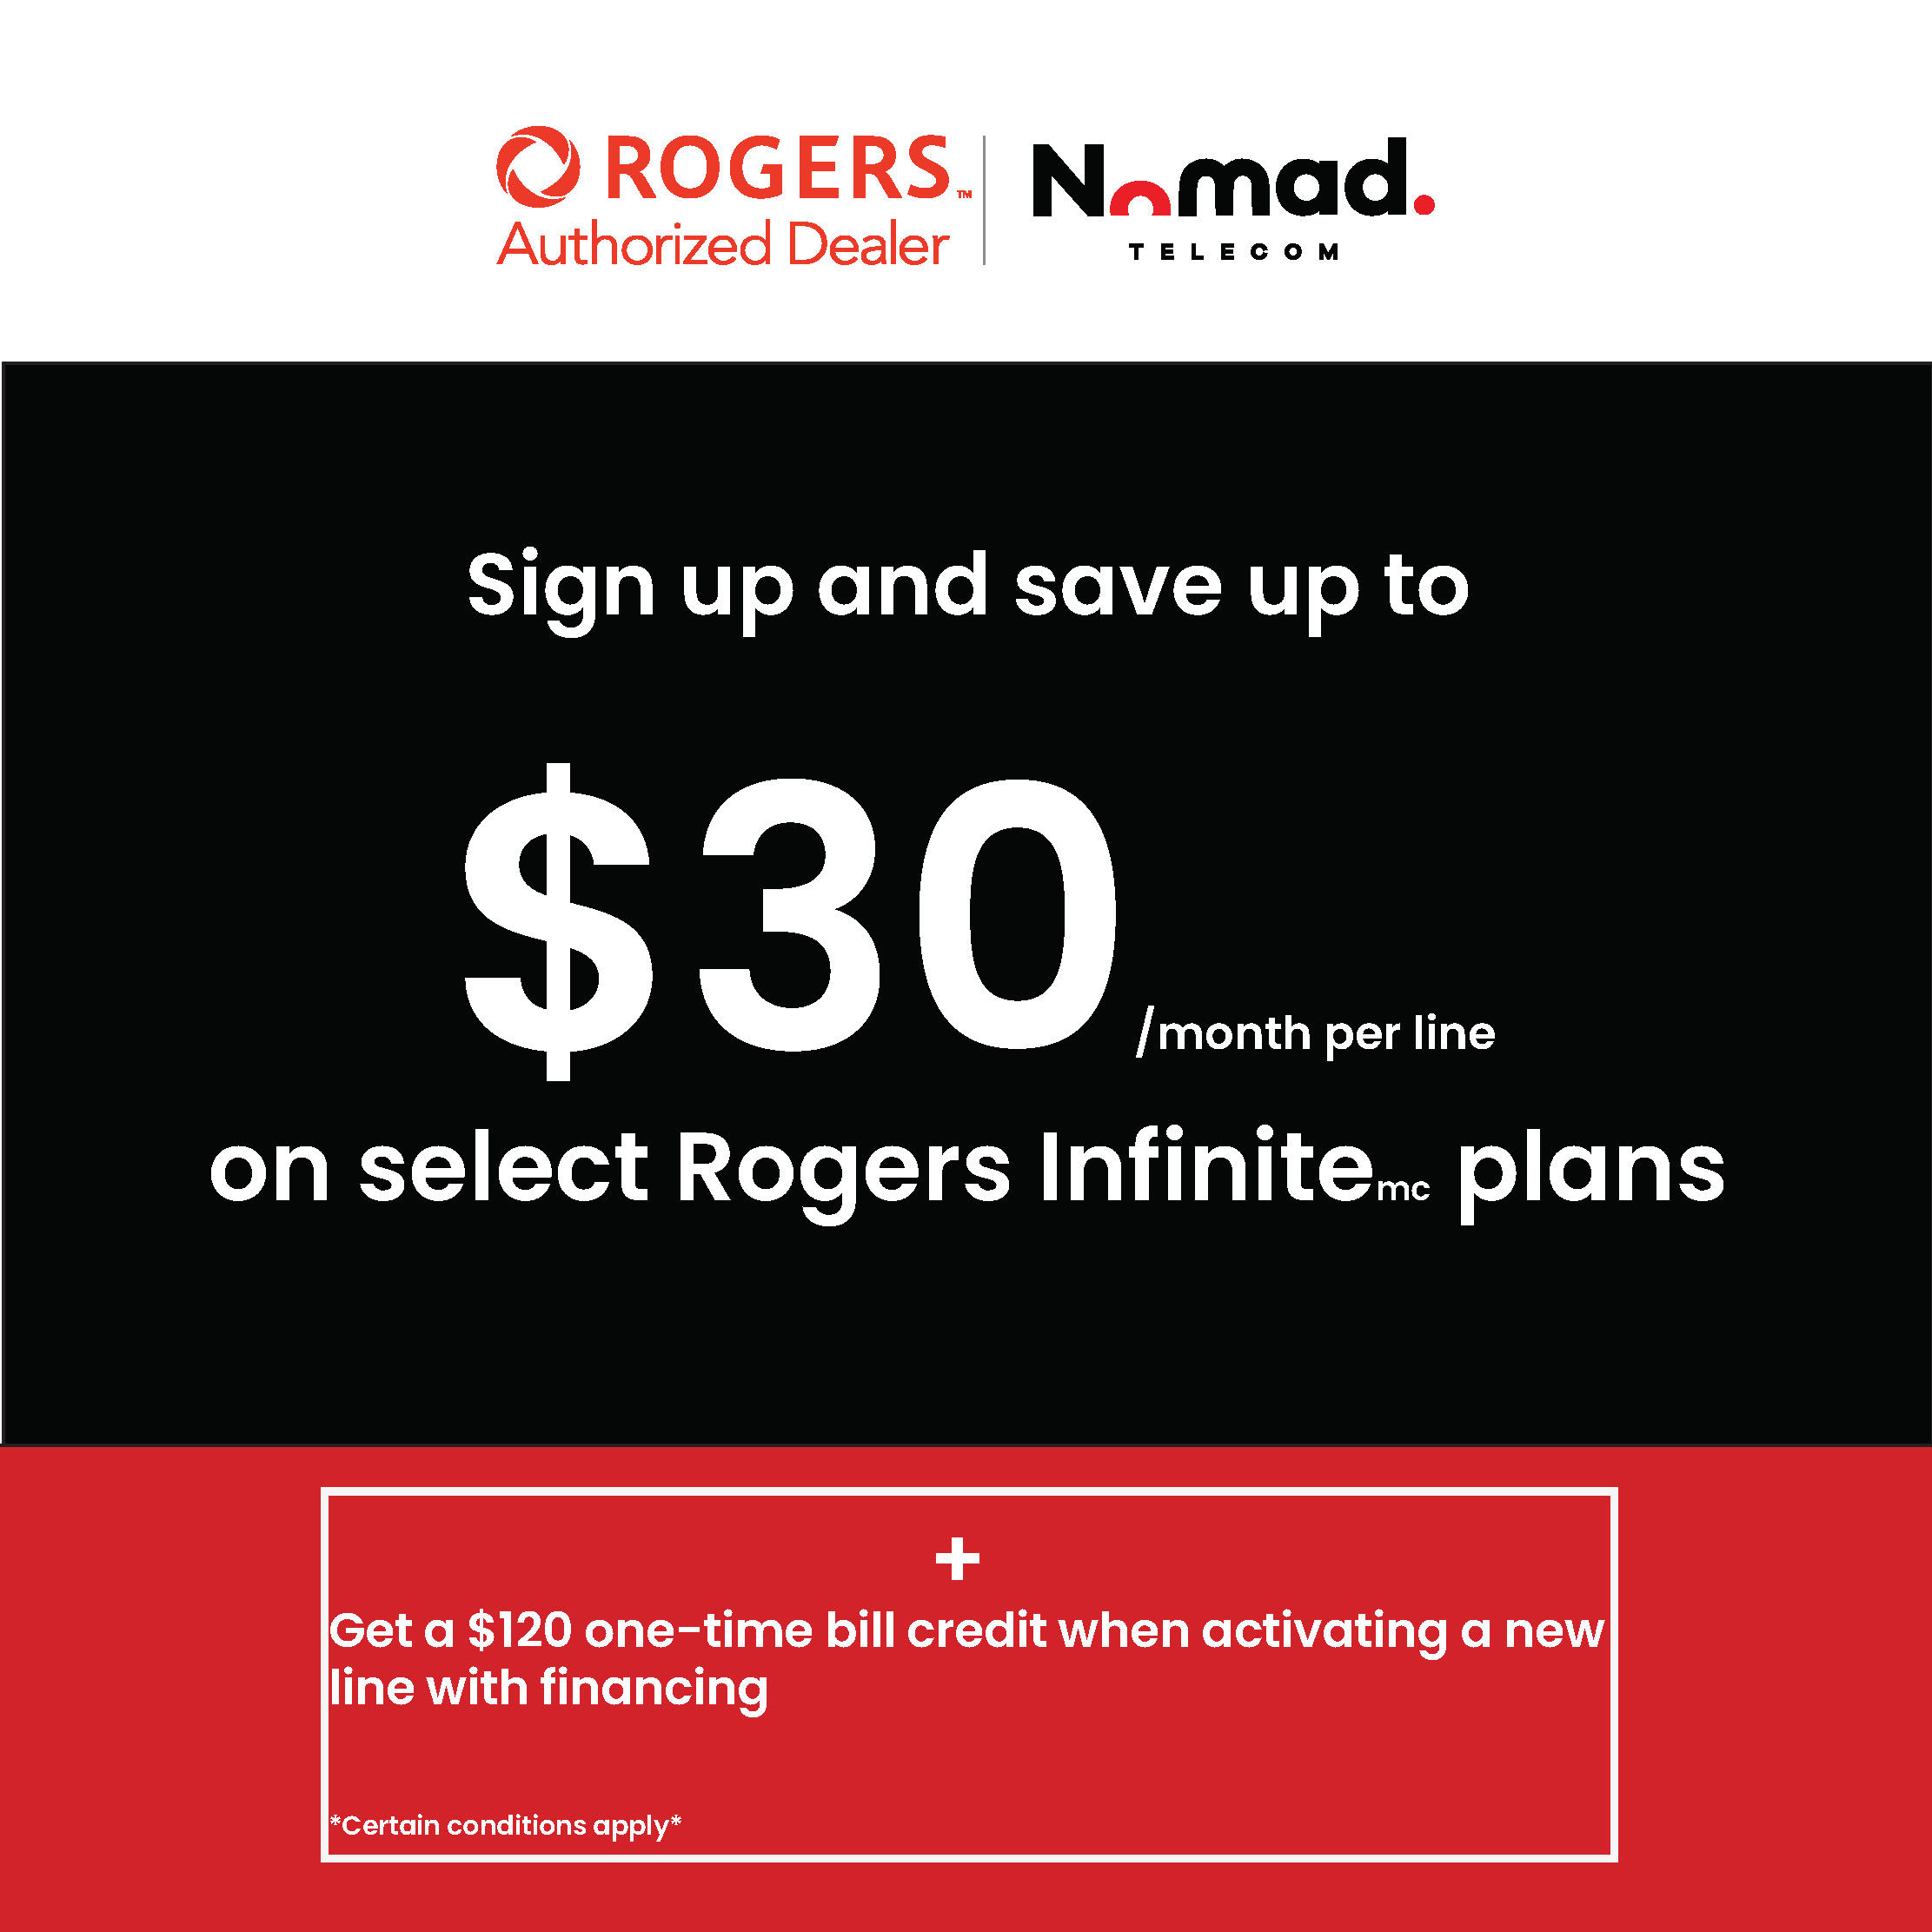 Rogers - Nomad Telecom